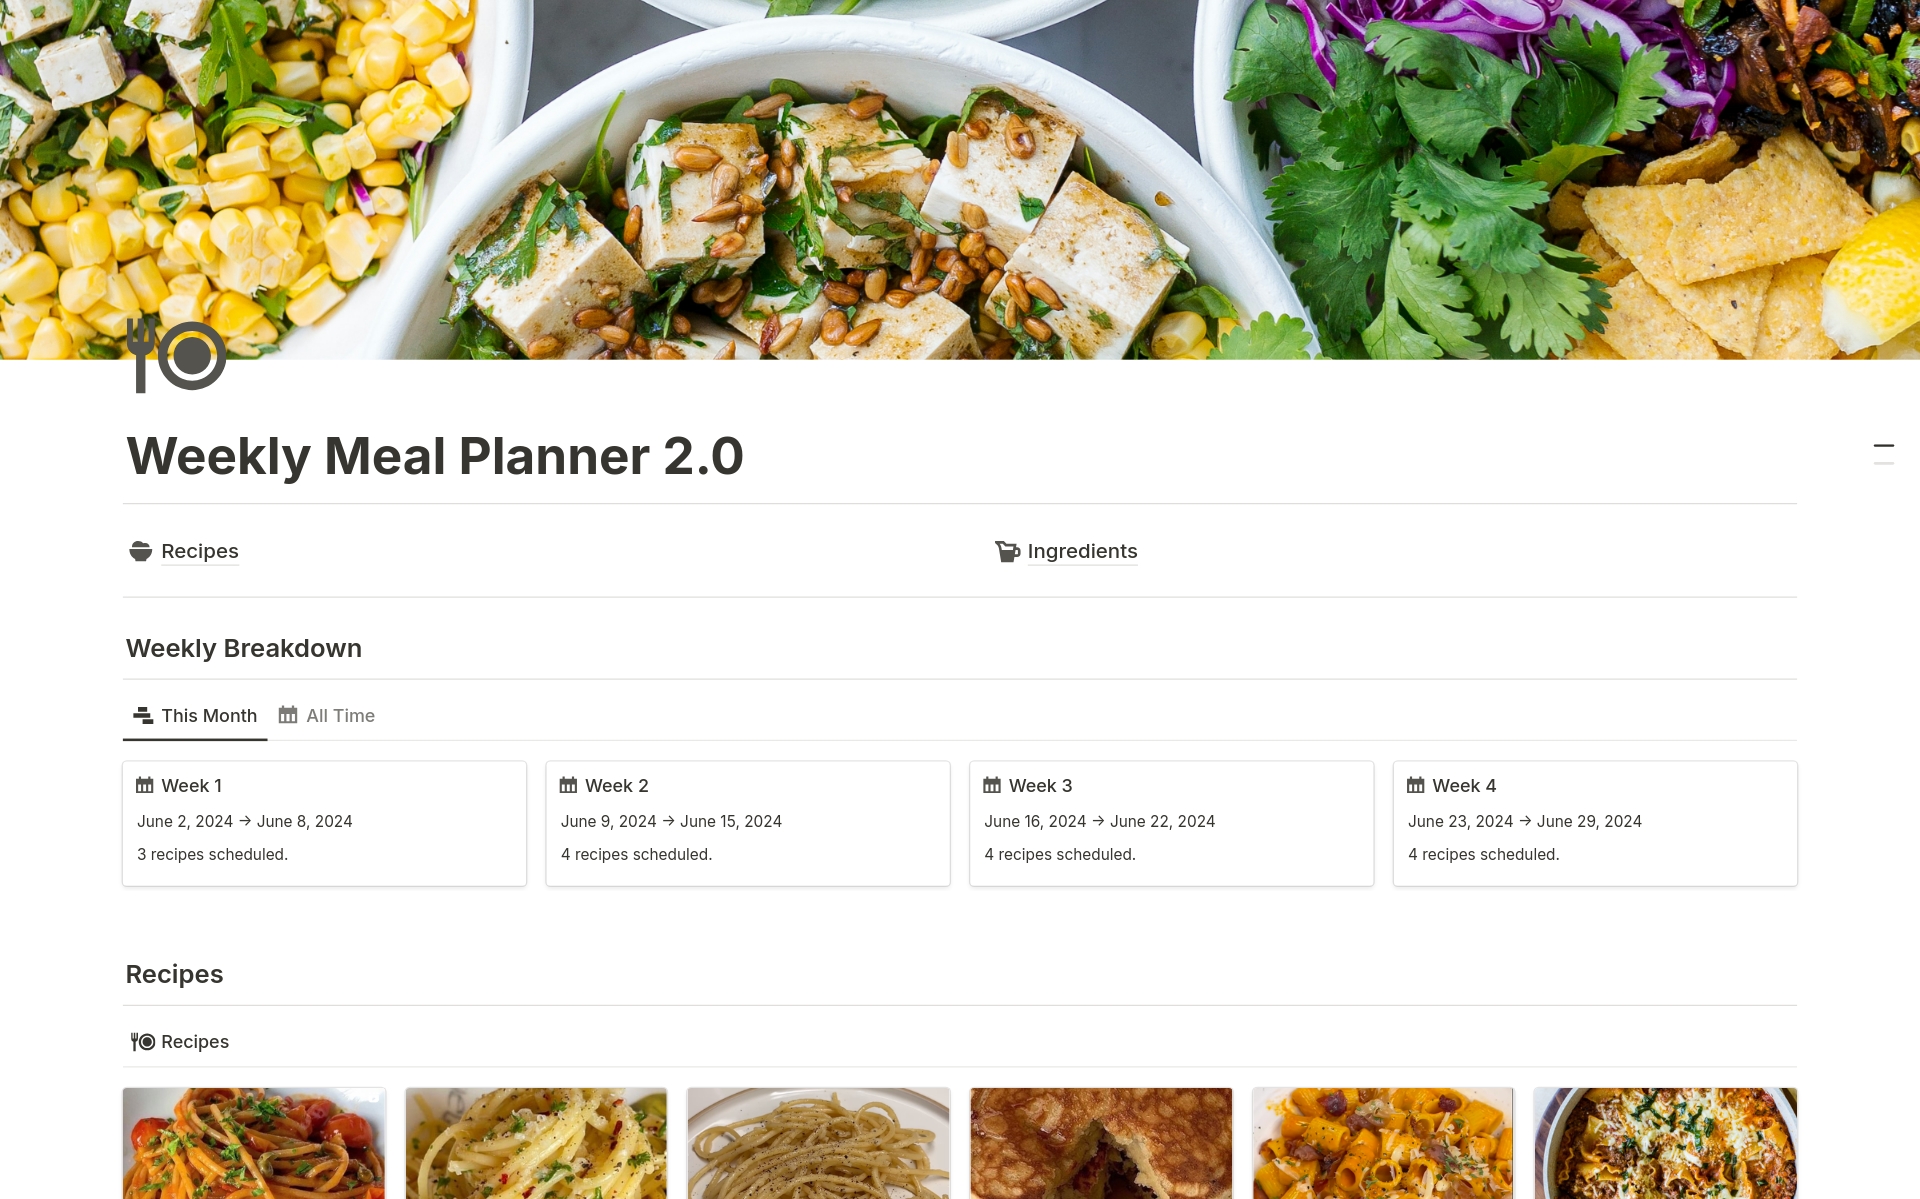 Aperçu du modèle de Weekly Meal Planner 2.0